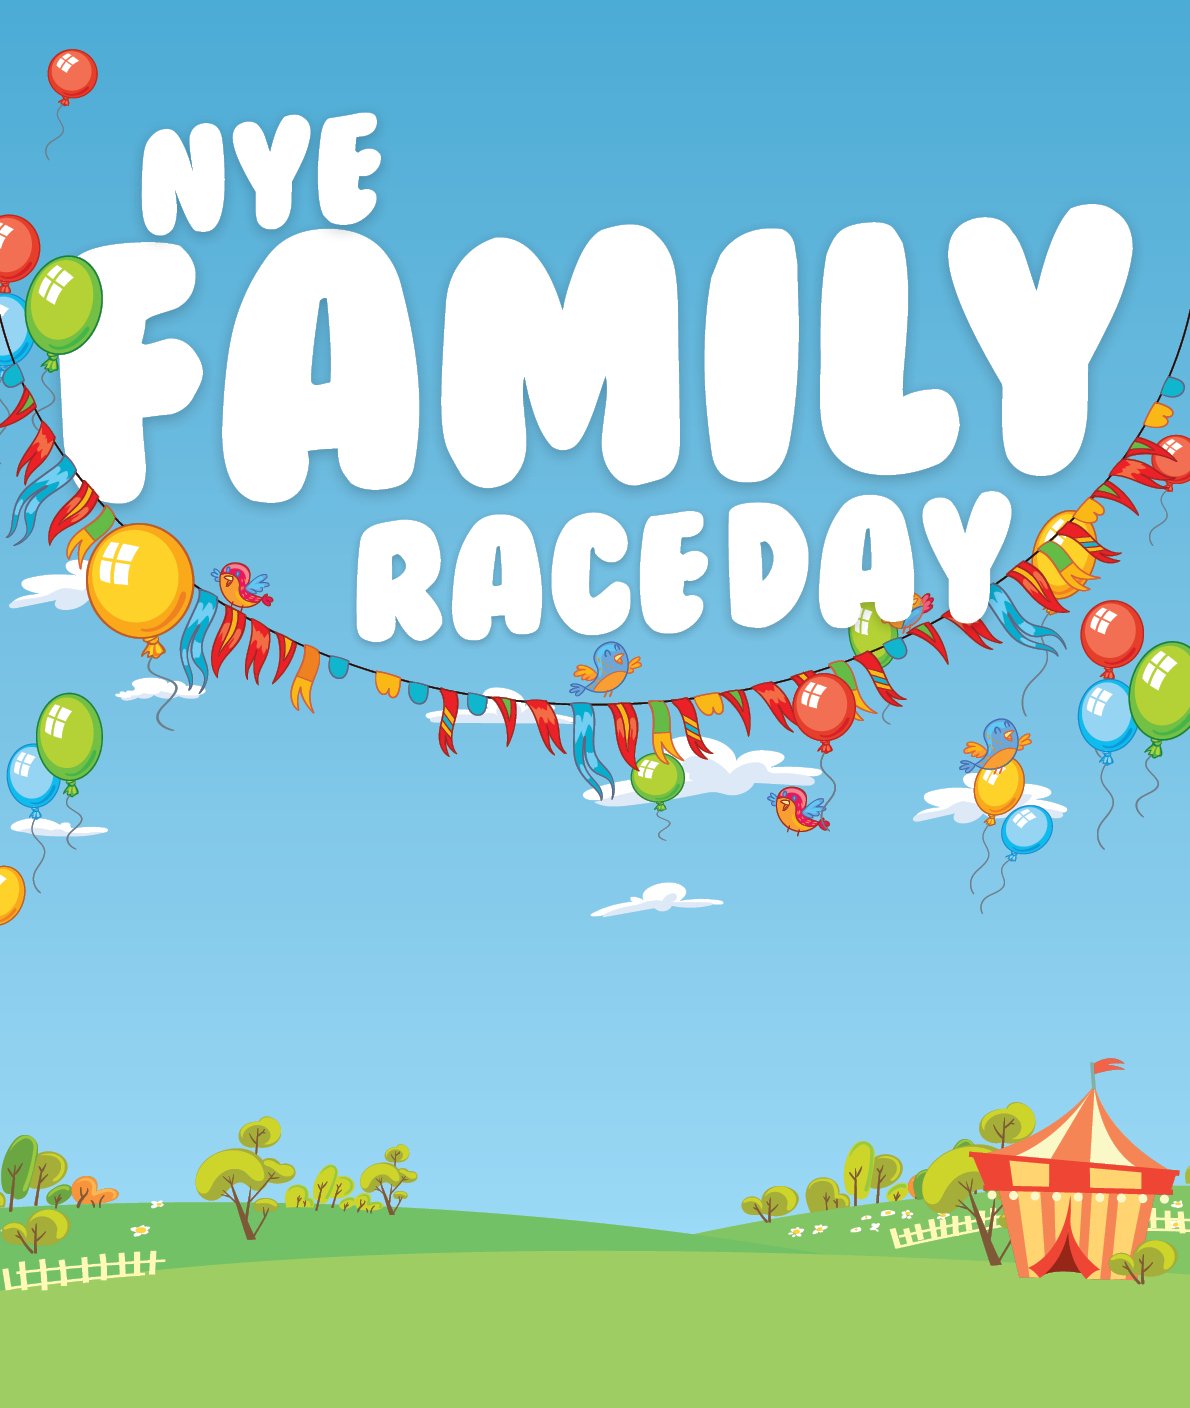 New Years Eve Family Raceday